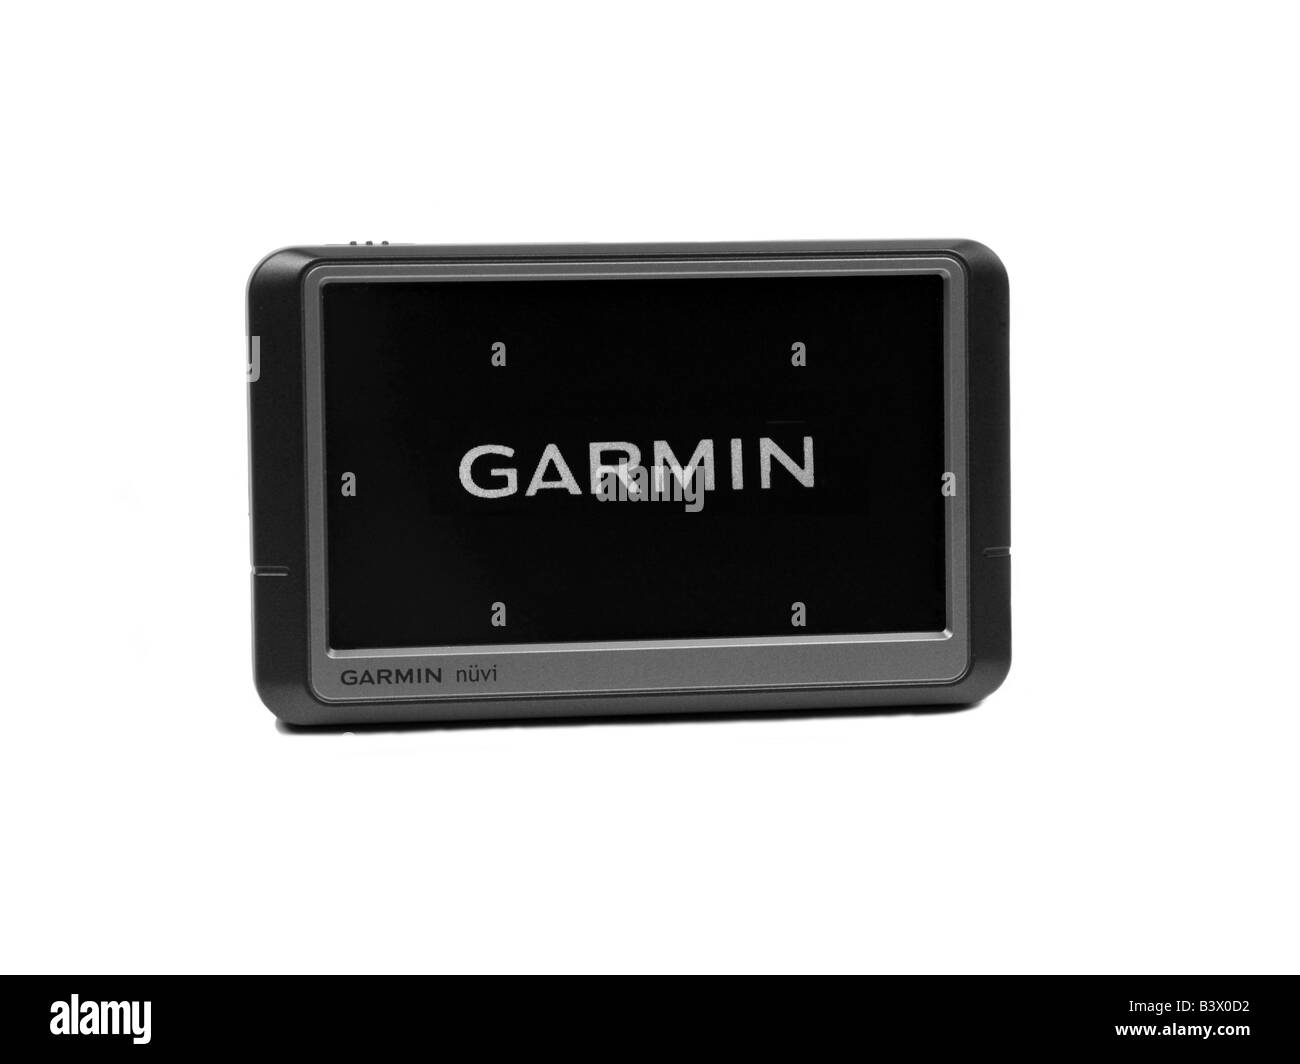 Garmin gps hi-res stock photography and images - Alamy